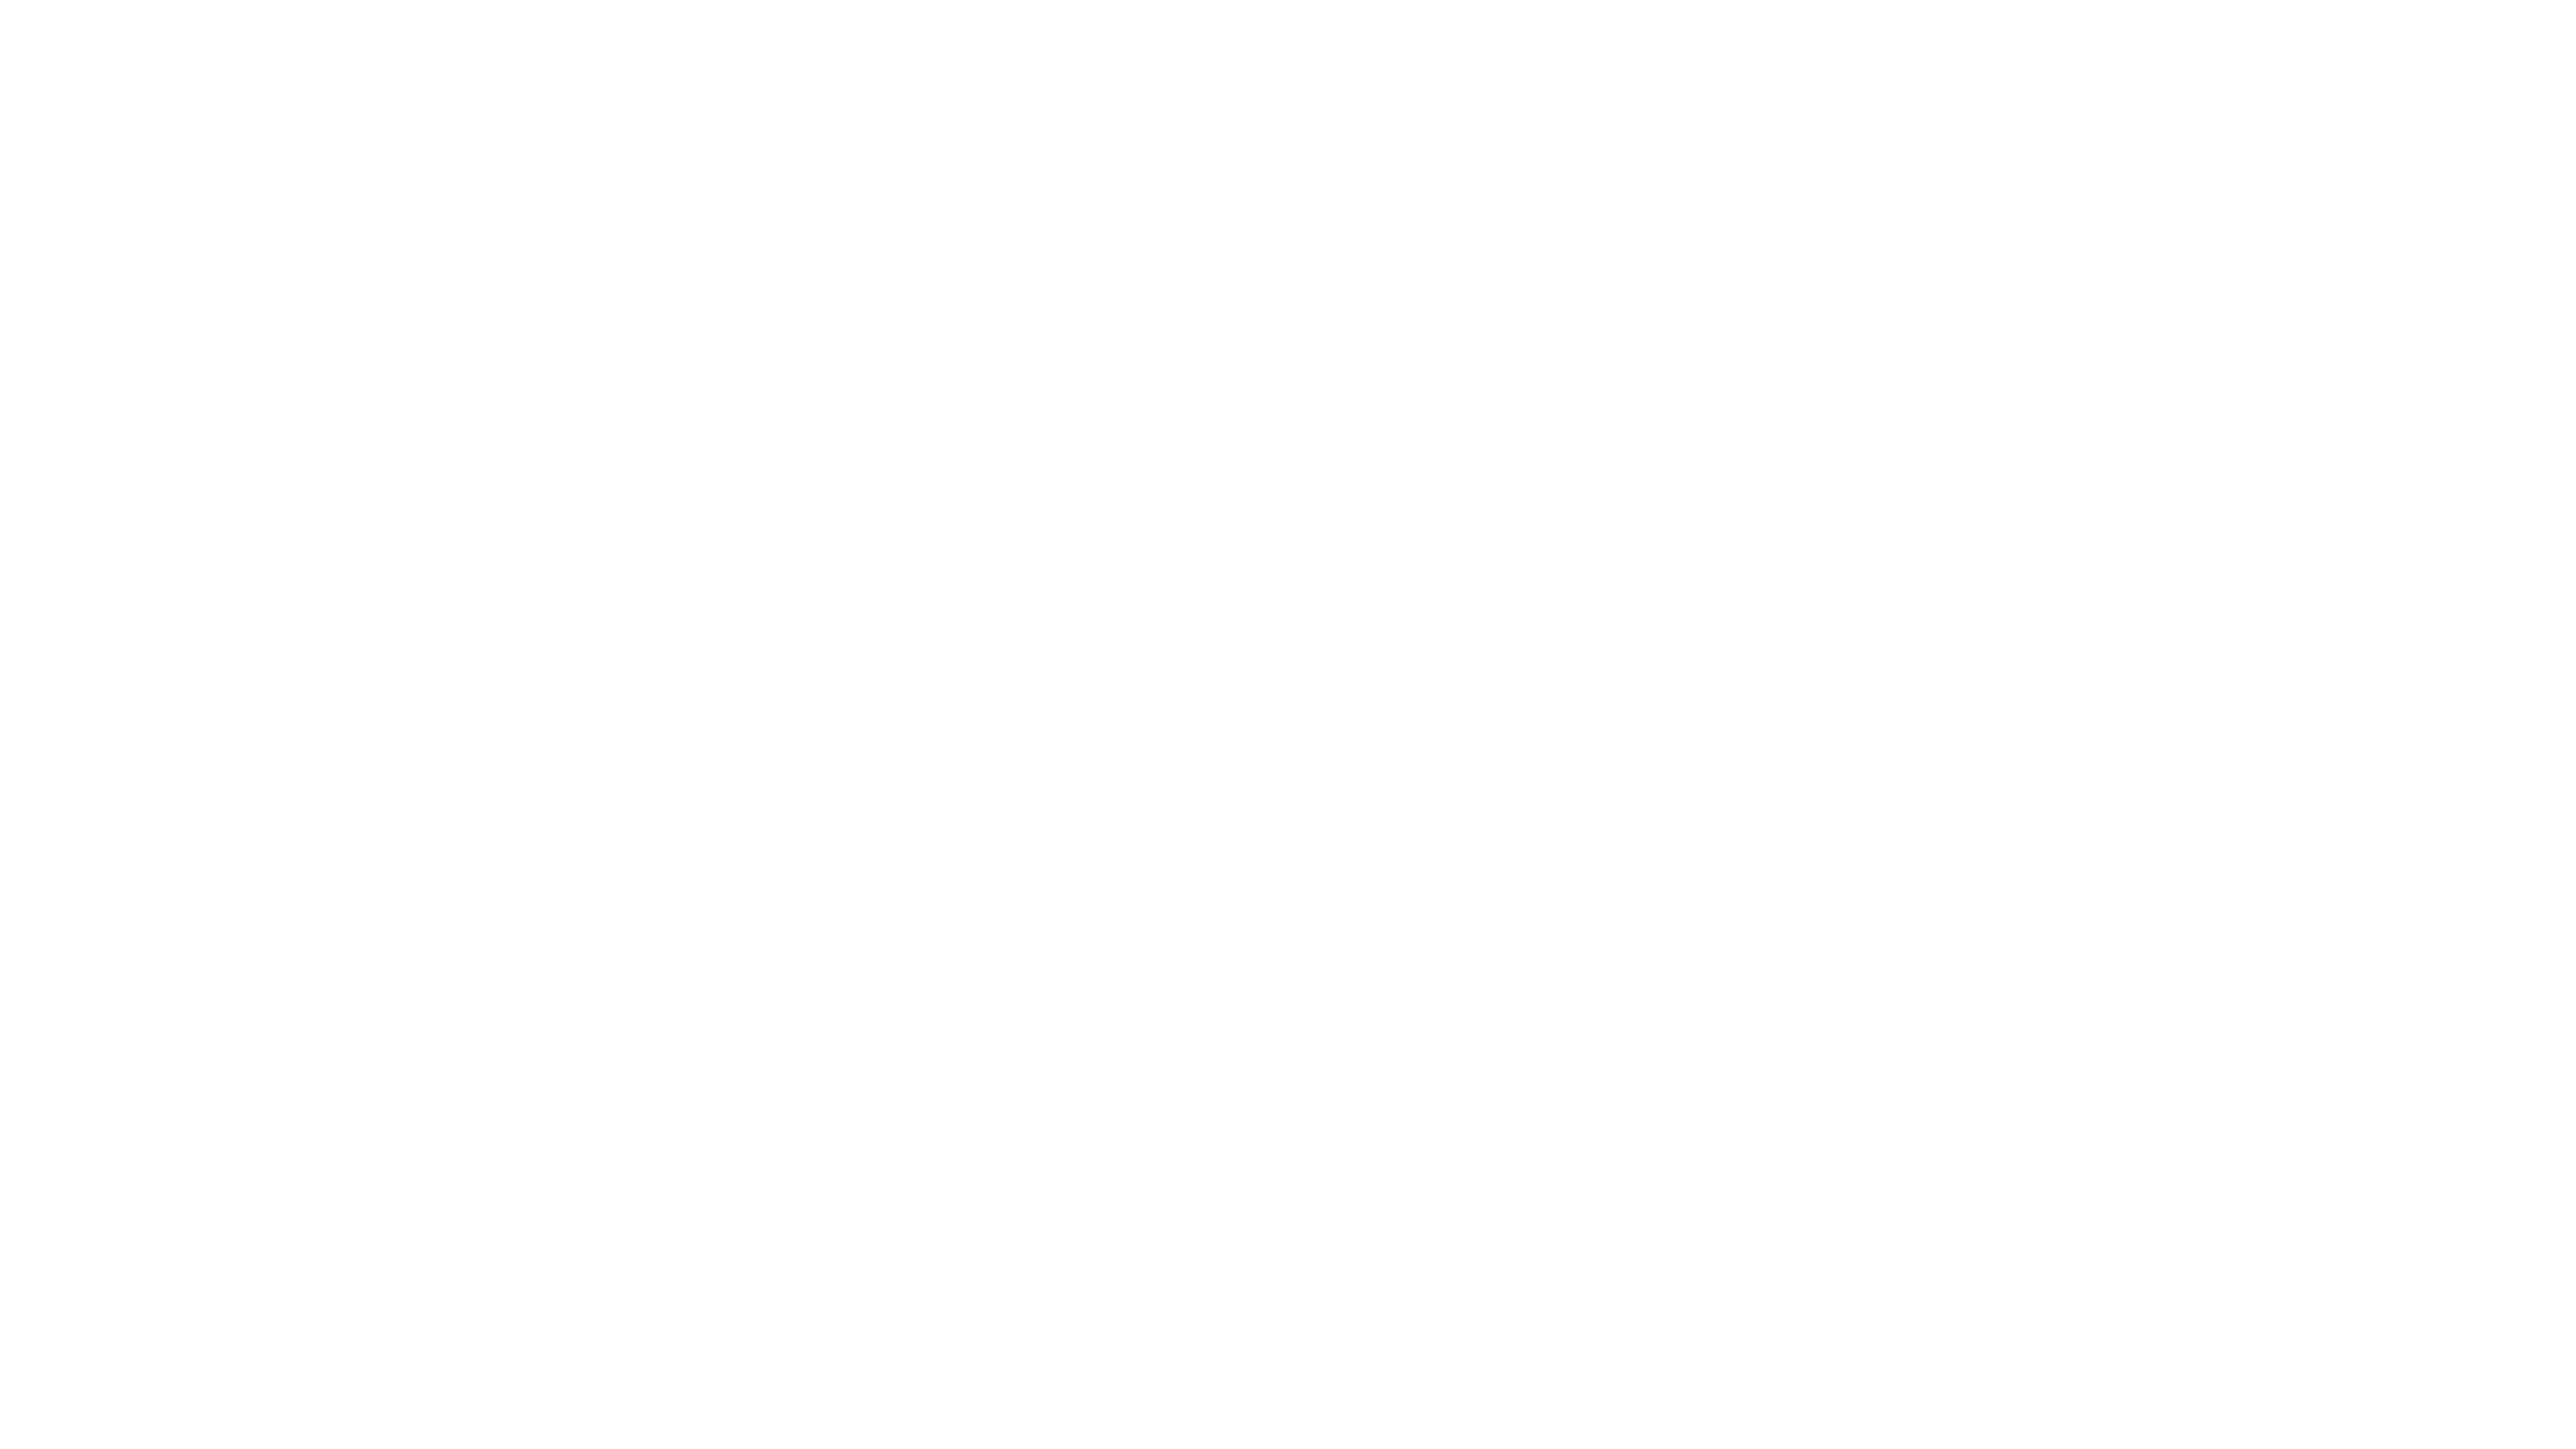 Hills Have Eyes Full Movie